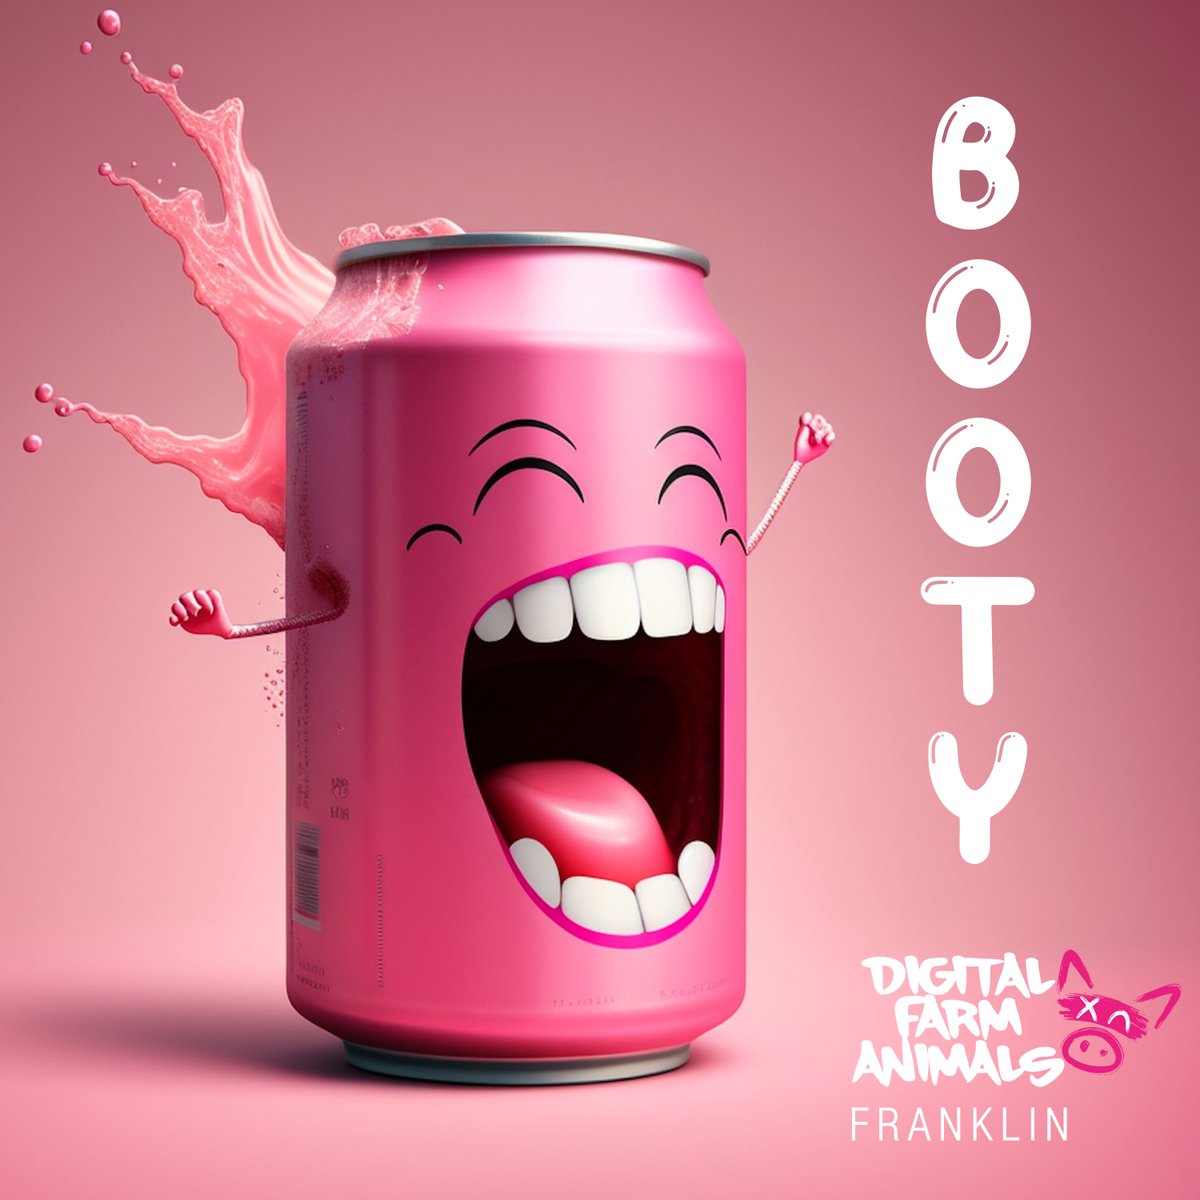 Pre-save B.O.O.T.Y 🍑 New track with @SoundofFranklin drops TOMORROW !! 🚨 🐷 🔥 ditto.fm/dfabooty